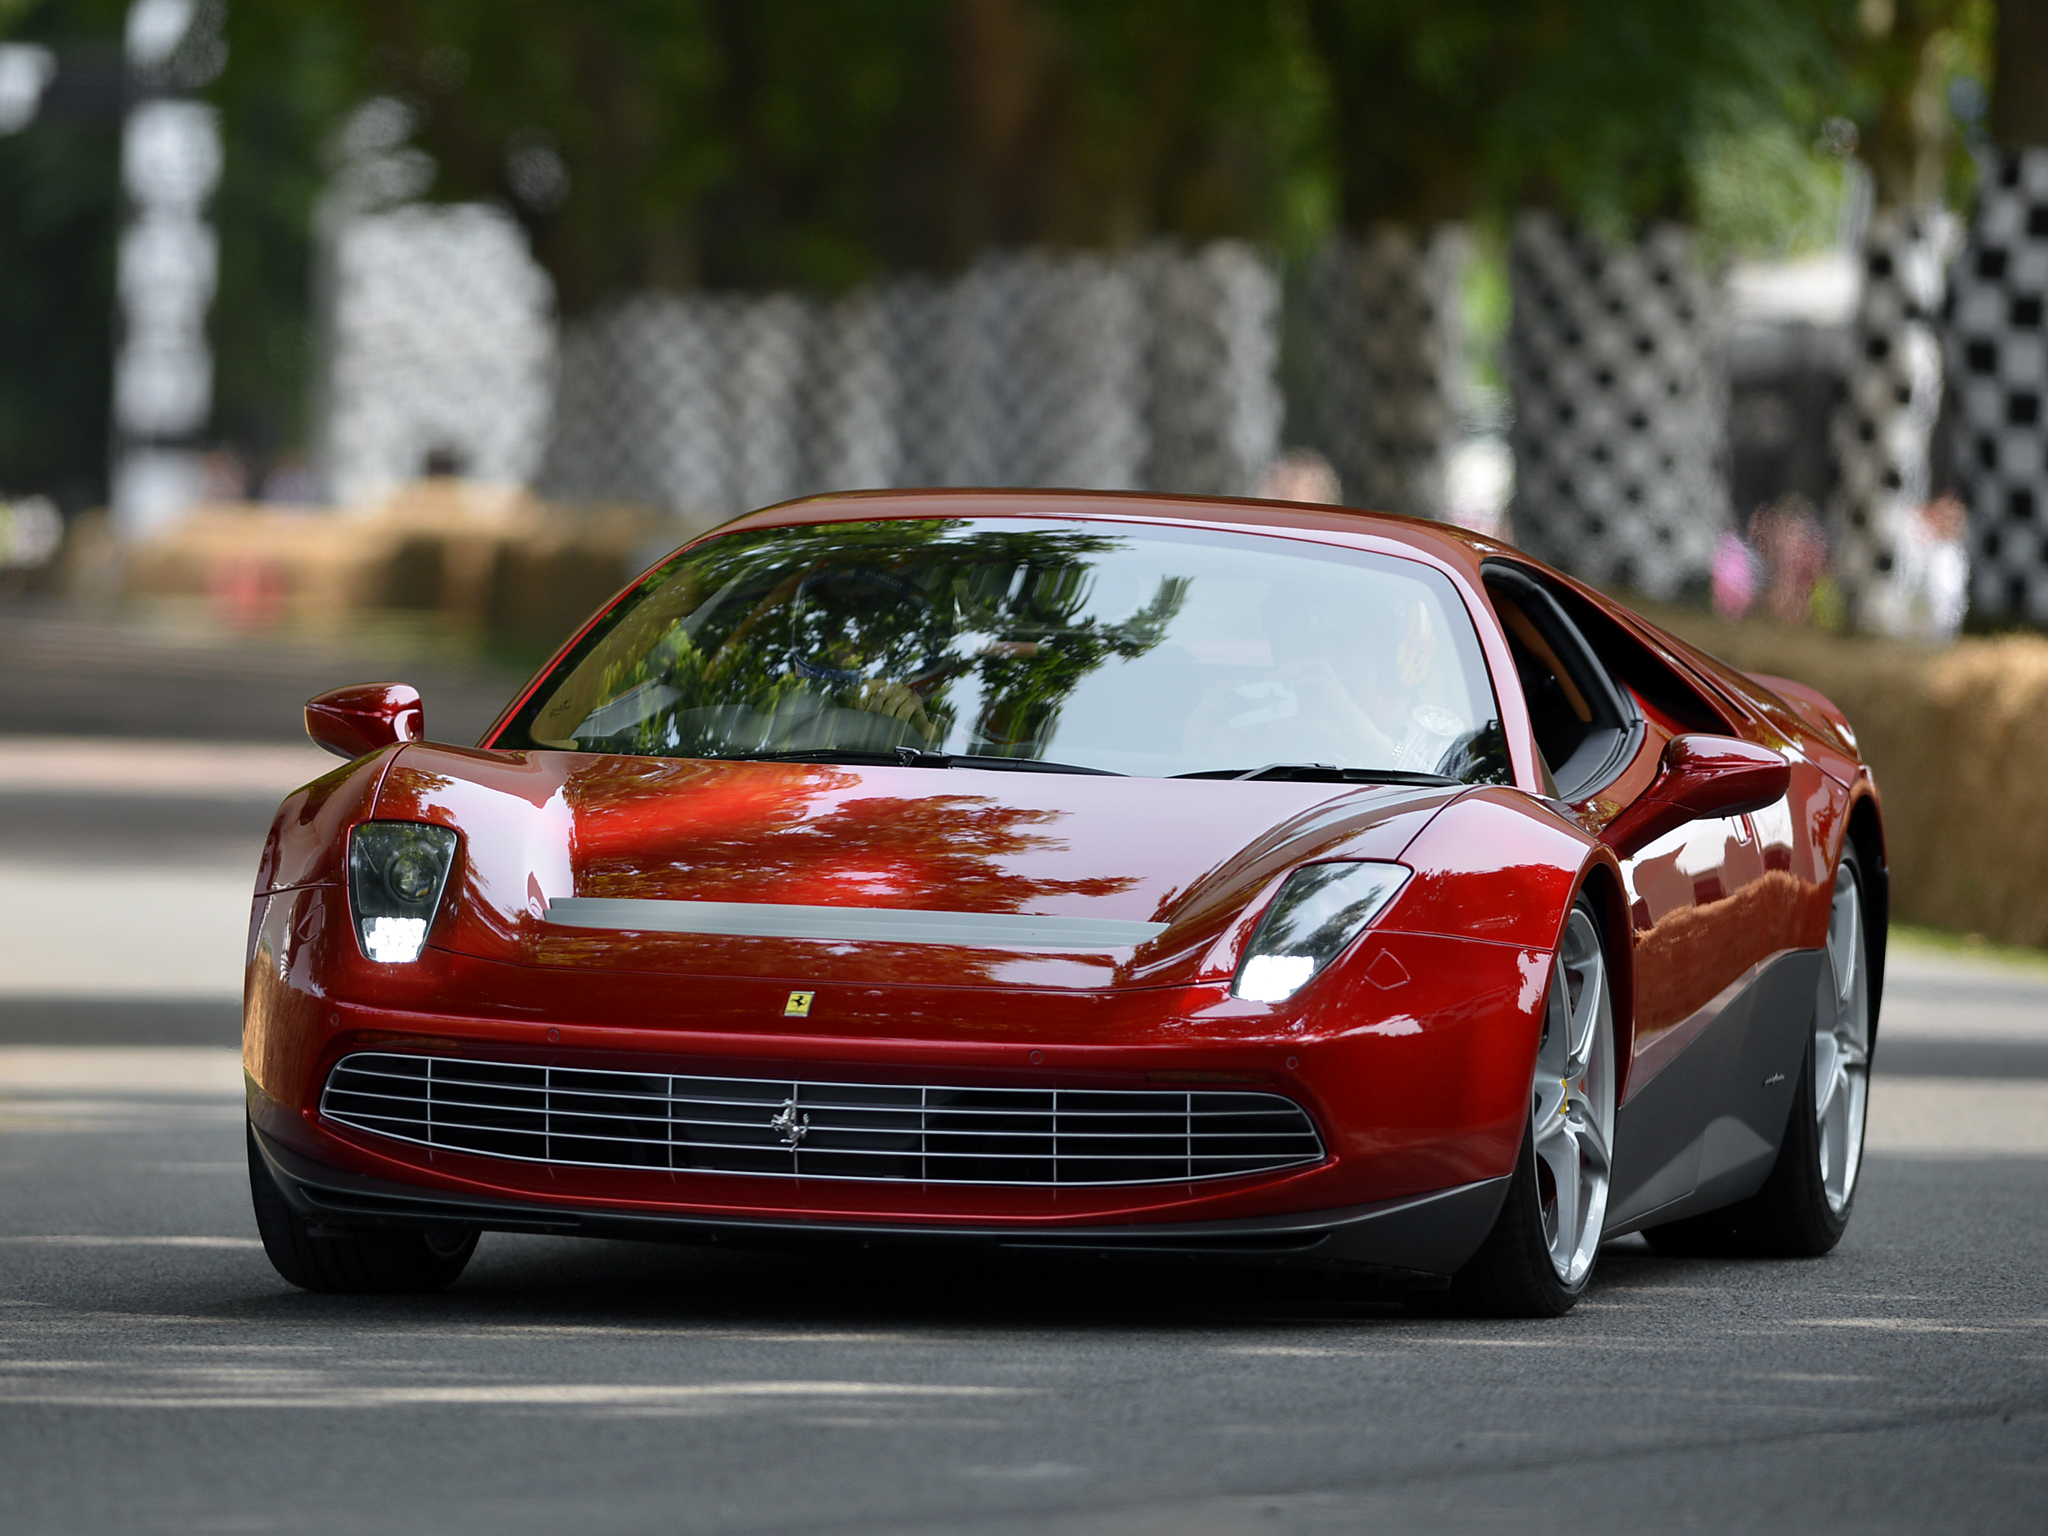 2012 Ferrari SP12 EC